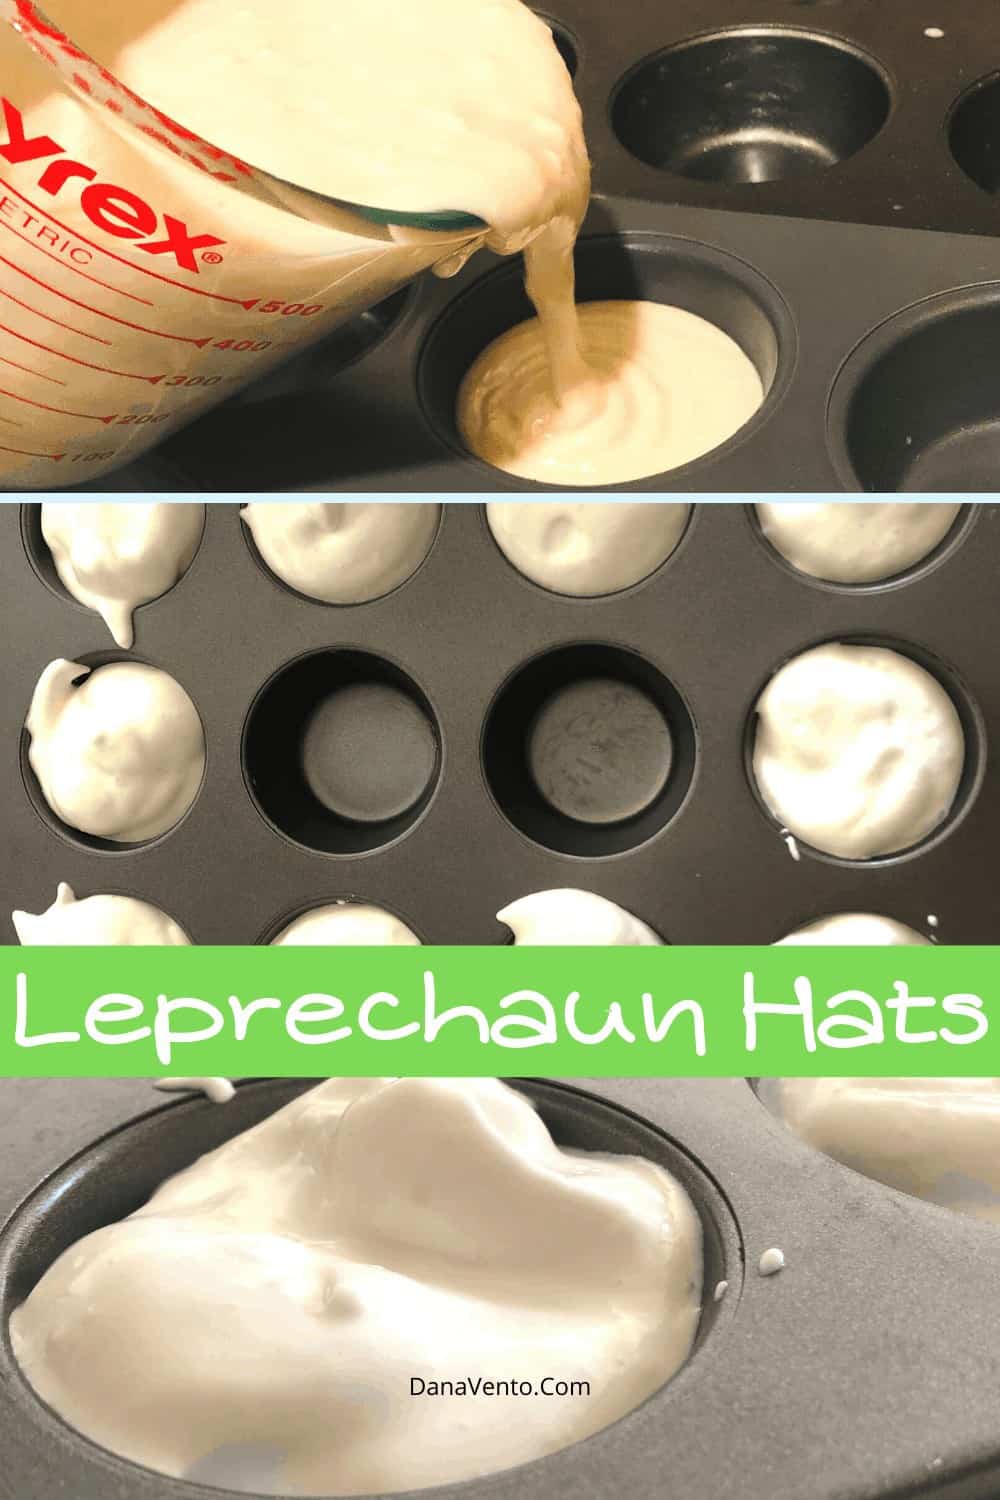 leprechaun hats in process in pan 